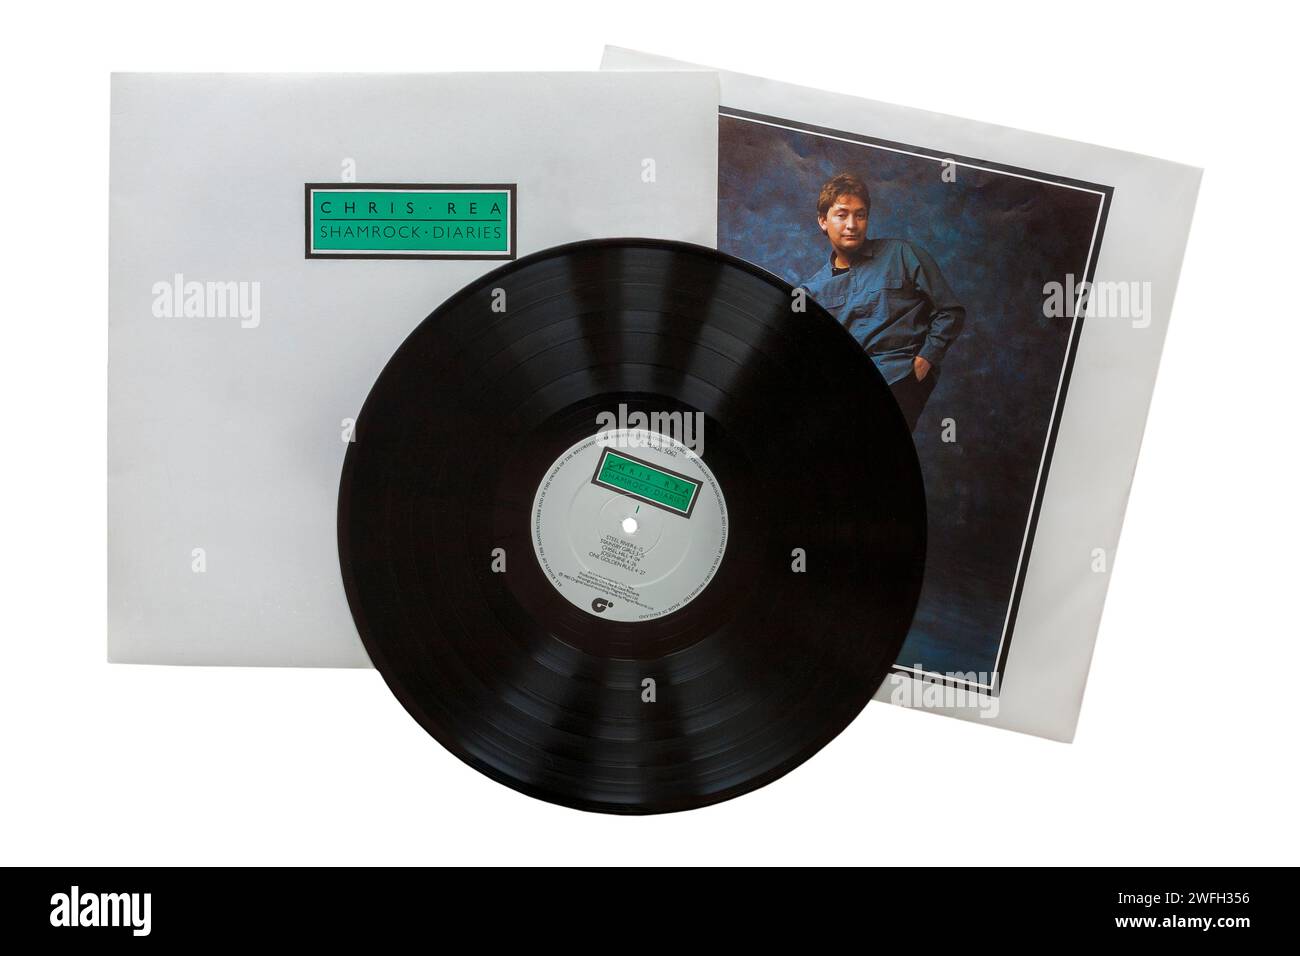 Chris Rea Shamrock Diaries vinyl record album LP cover isolated on white background - 1985 Stock Photo